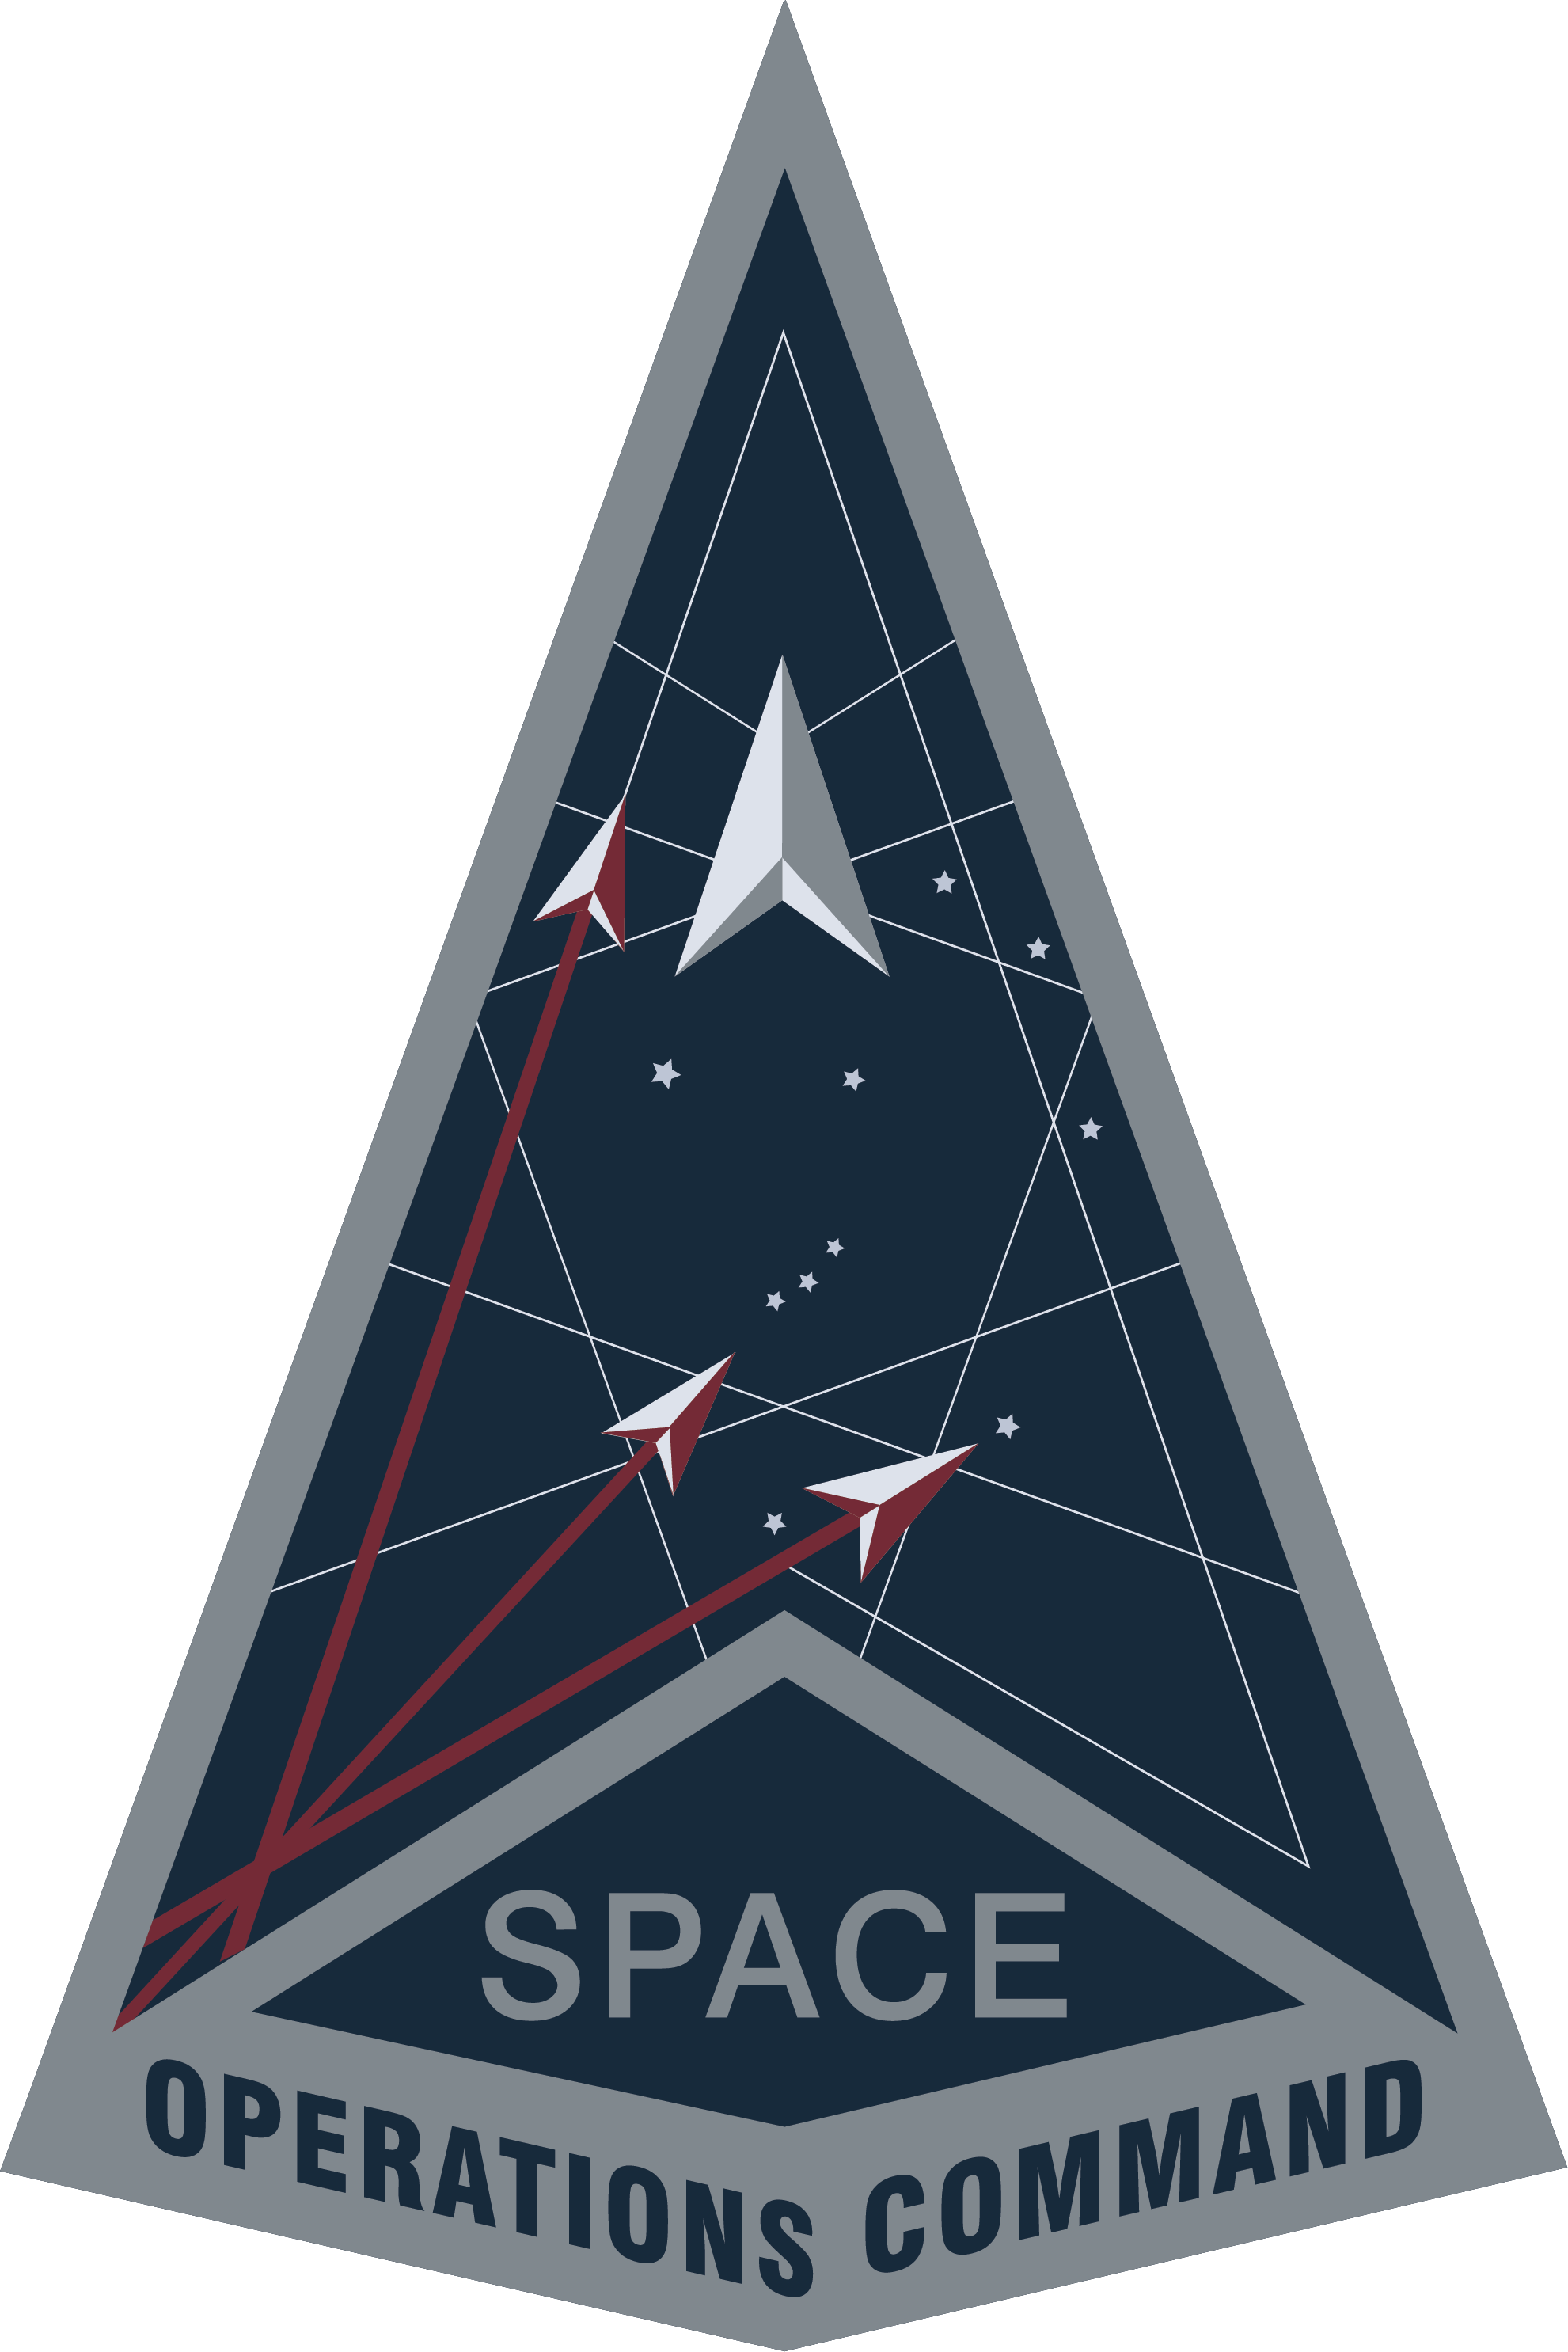 Space Operations Command emblem